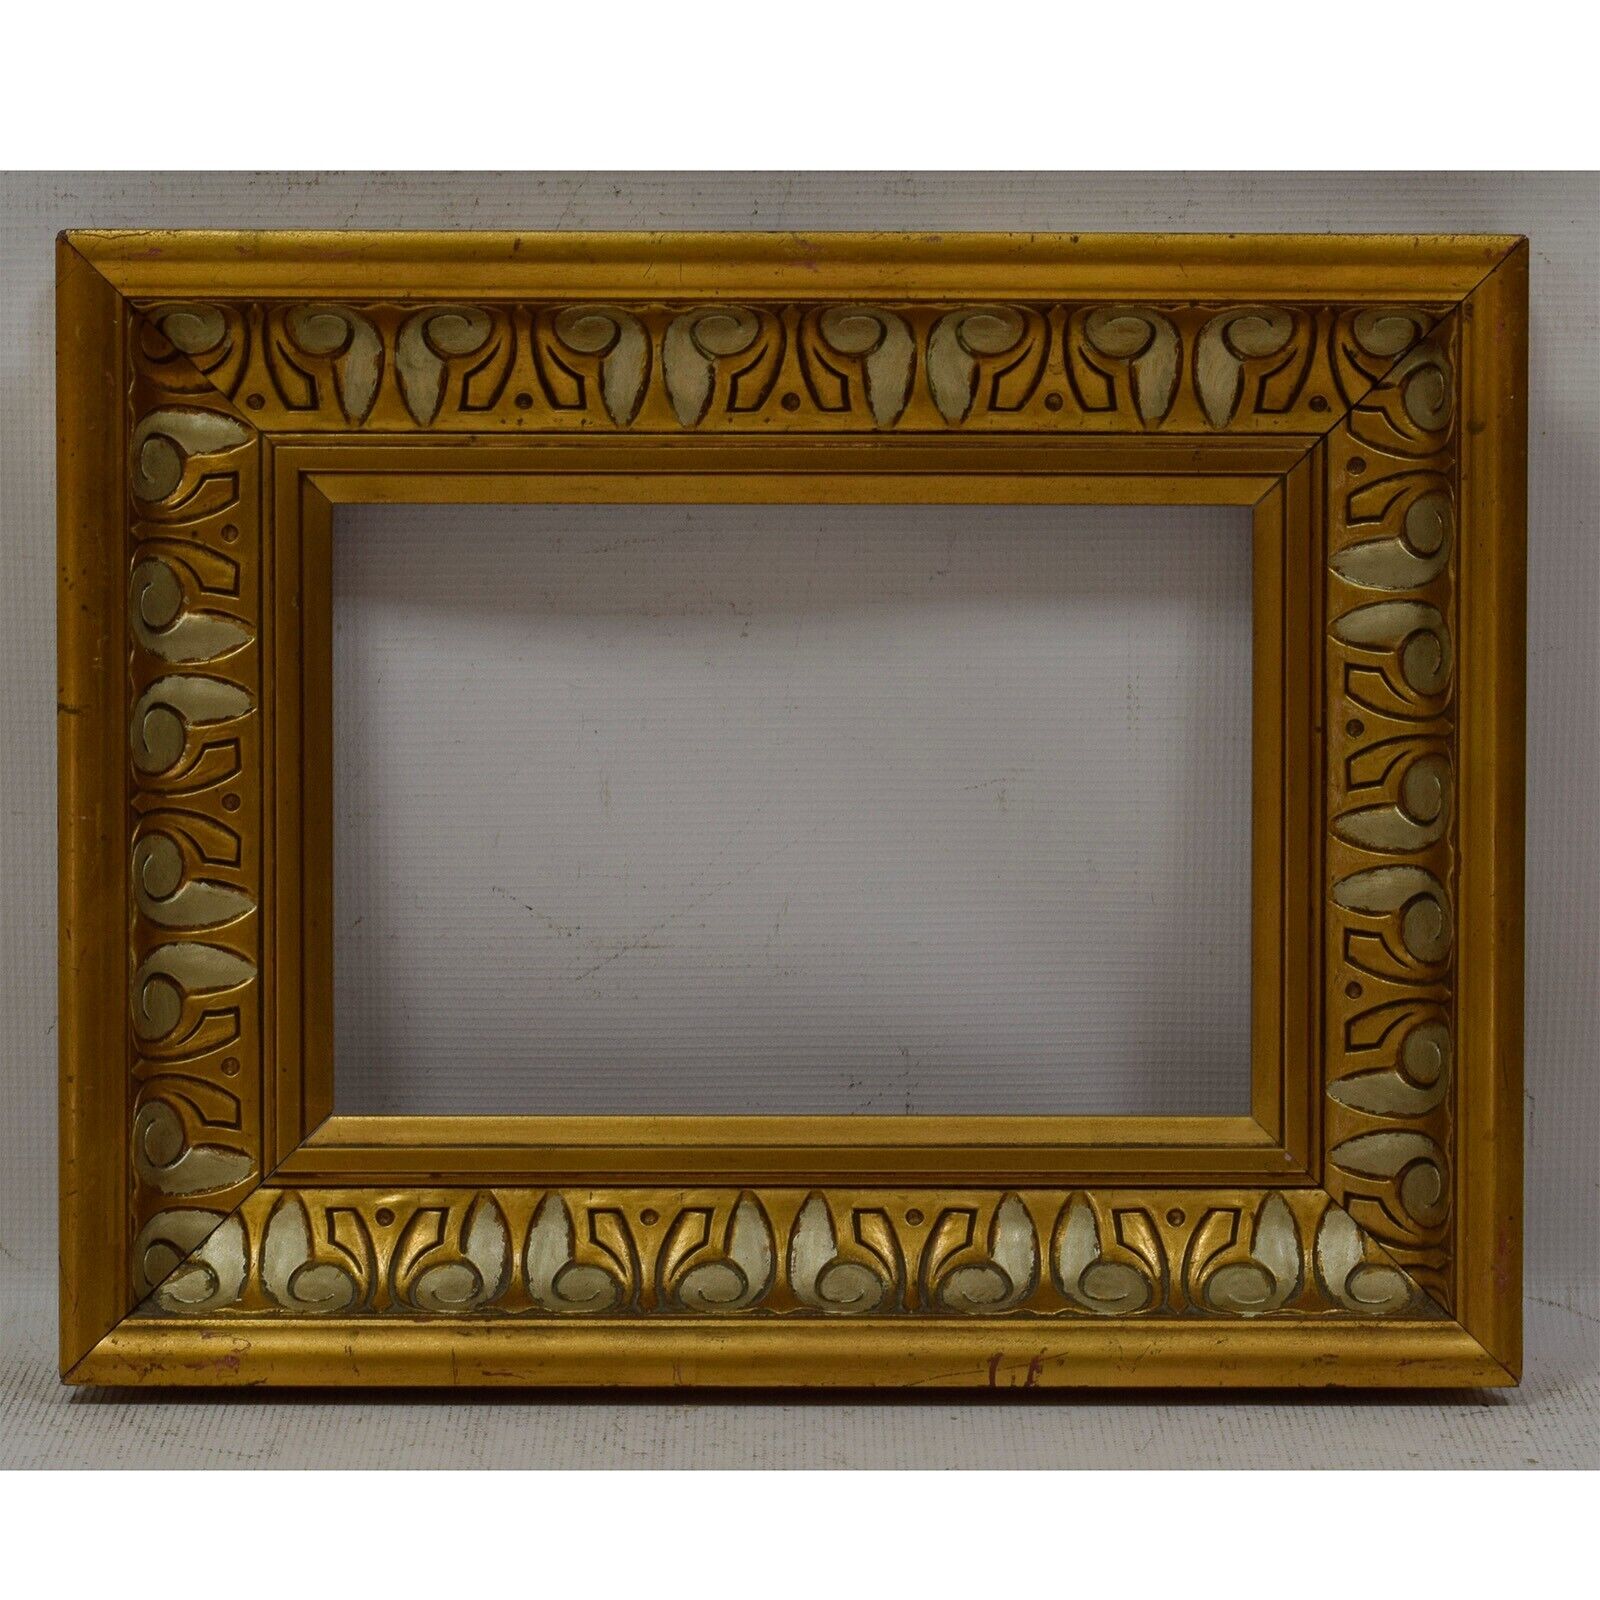 Ca. 1930-1940 Old wooden decorative frame original condition Internal: 11.2x7.7